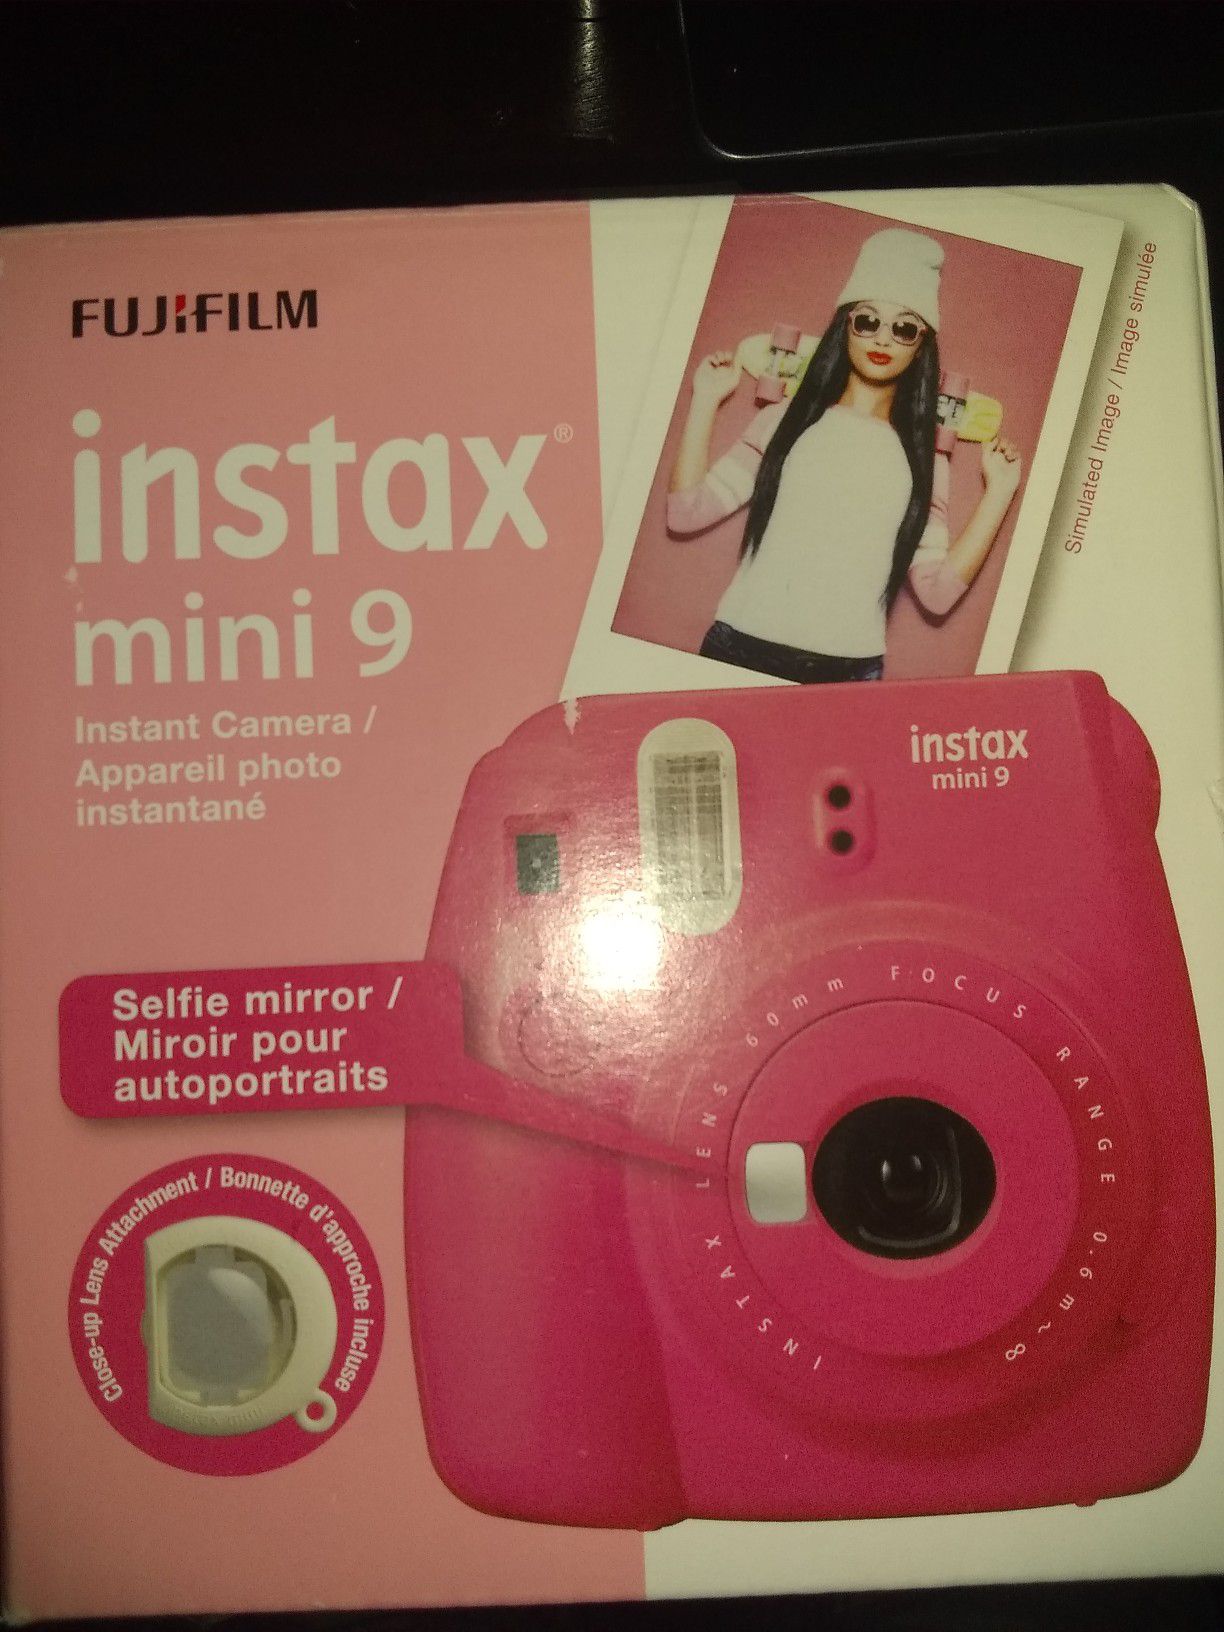 Instax mini 9 instant camera